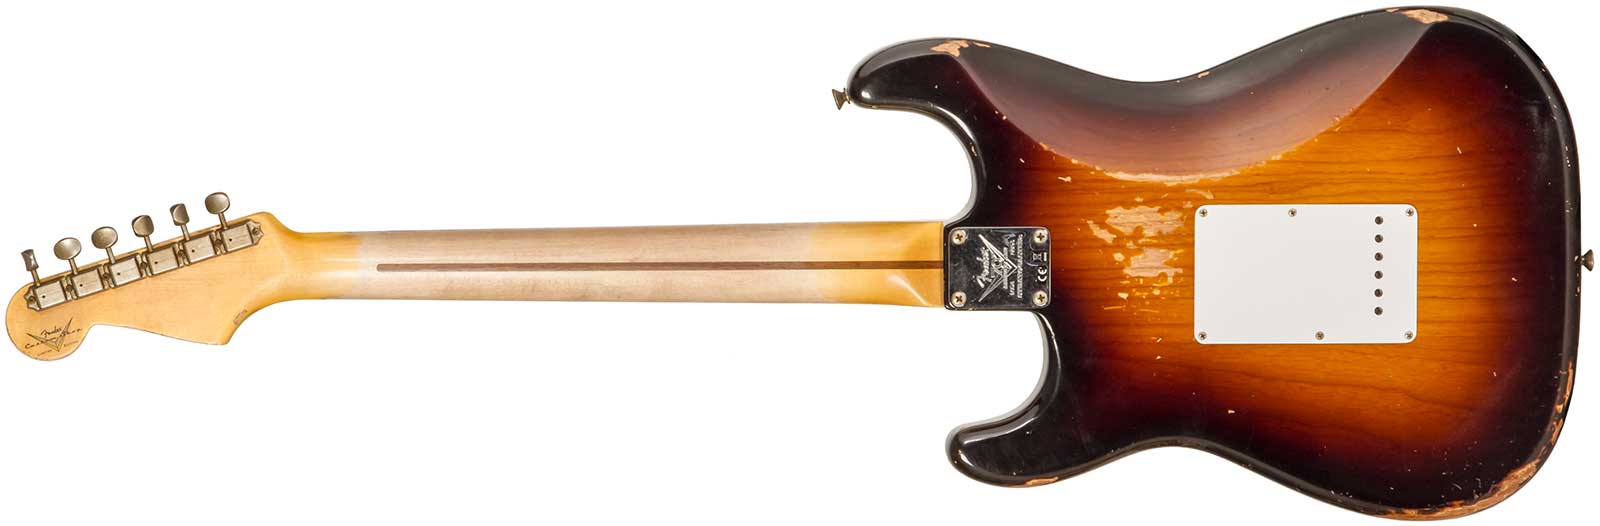 Fender Custom Shop Strat 1954 70th Anniv. 3s Trem Mn #xn4309 - Heavy Relic Wide Fade 2-color Sunburst - Str shape electric guitar - Variation 1